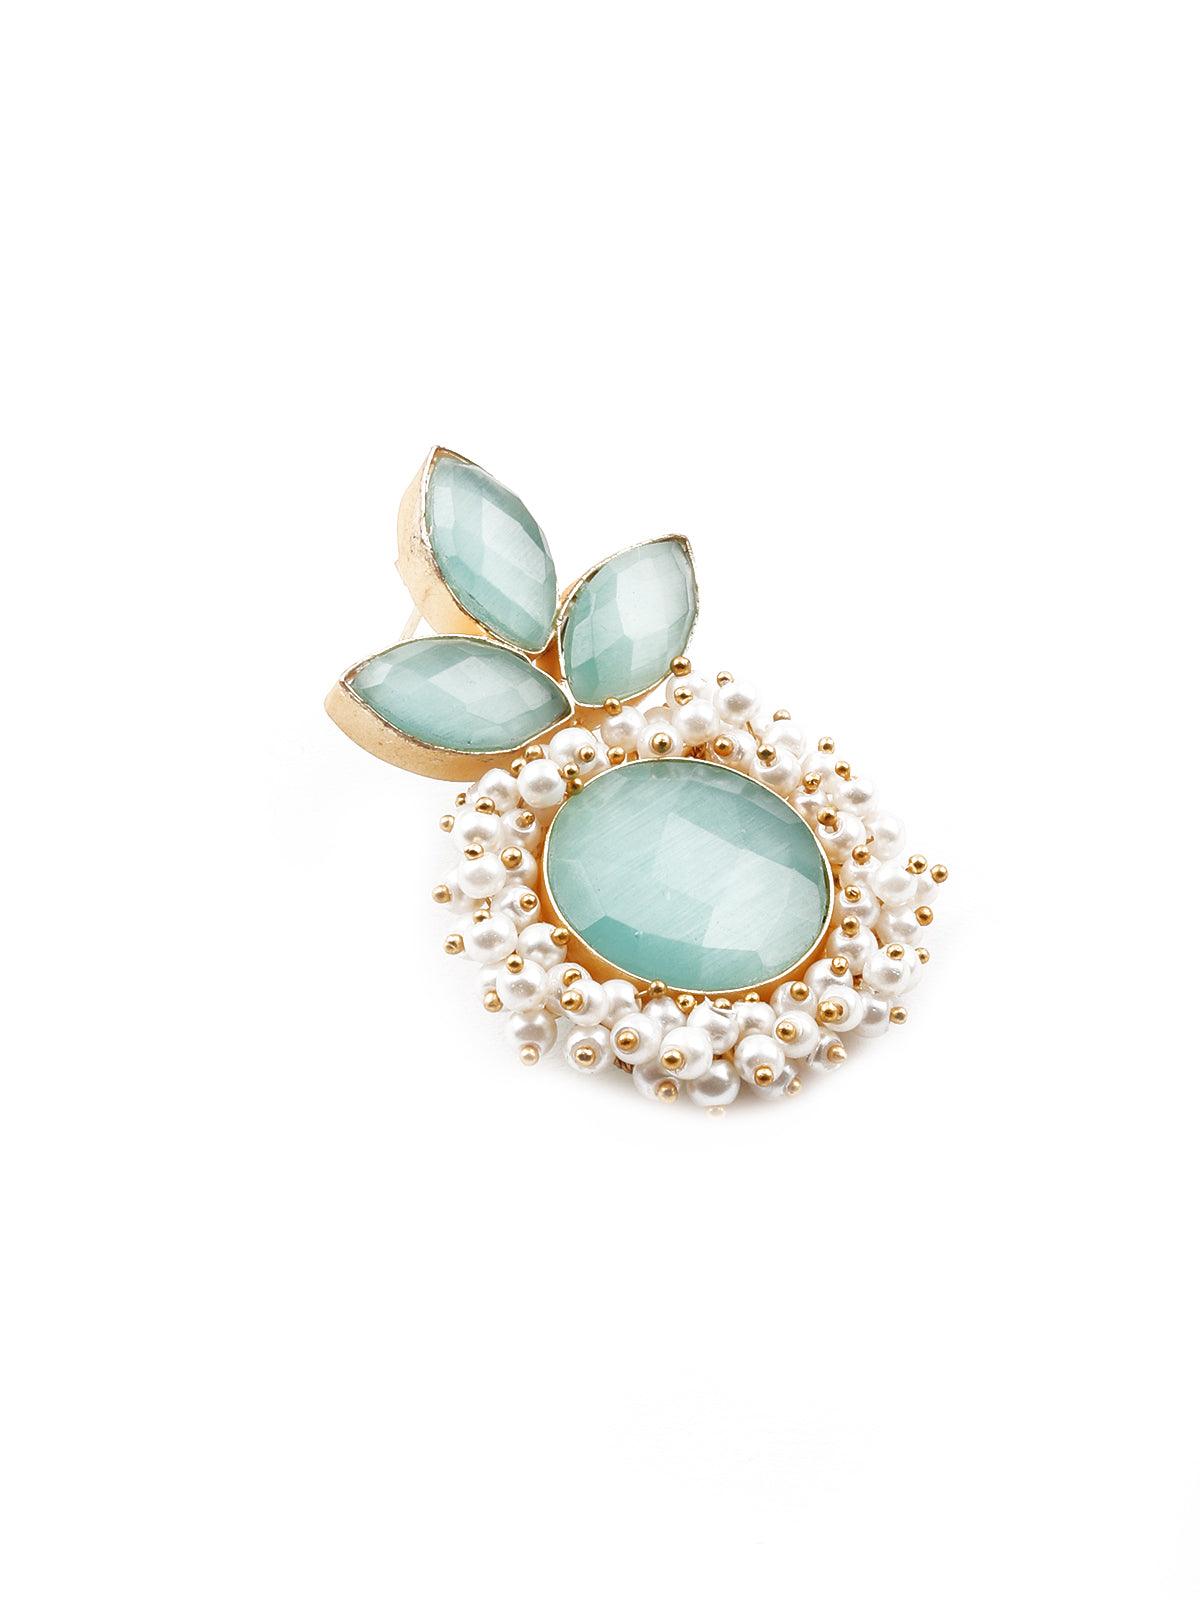 Women's Floral Stunning Light Blue Statement Earrings - Odette